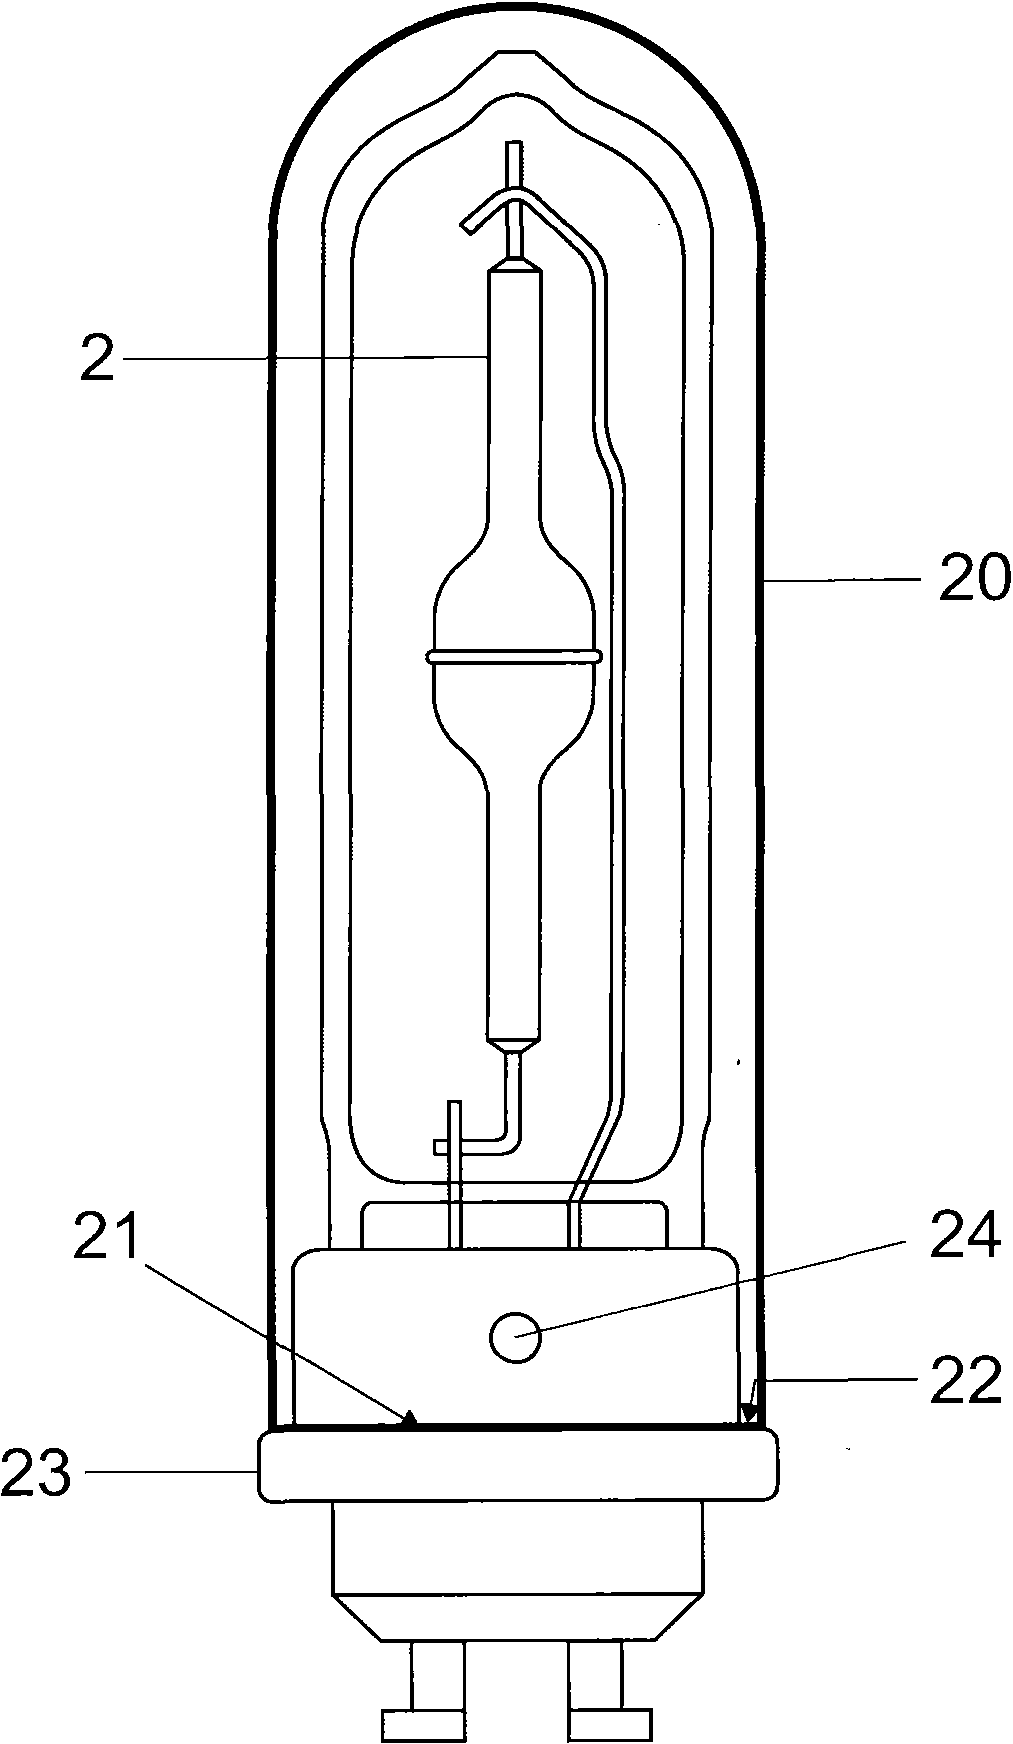 High pressure discharge lamp